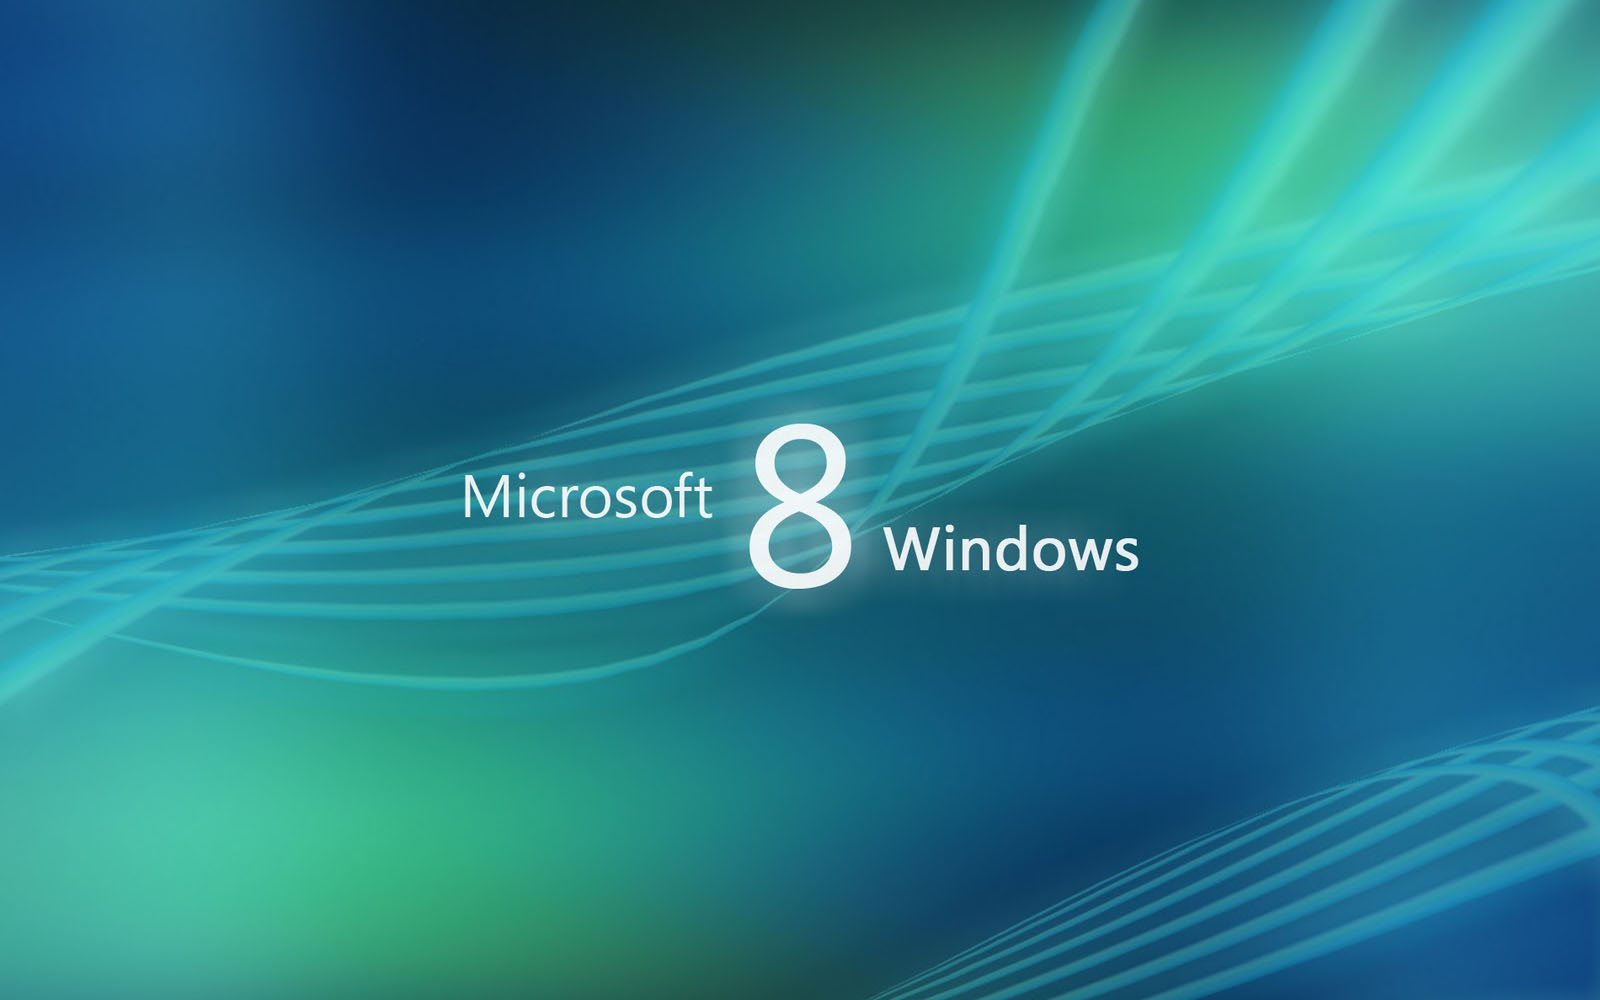 The Windows 8 Themes Windows 8 Latest Desktop Background Themes 1600x1000